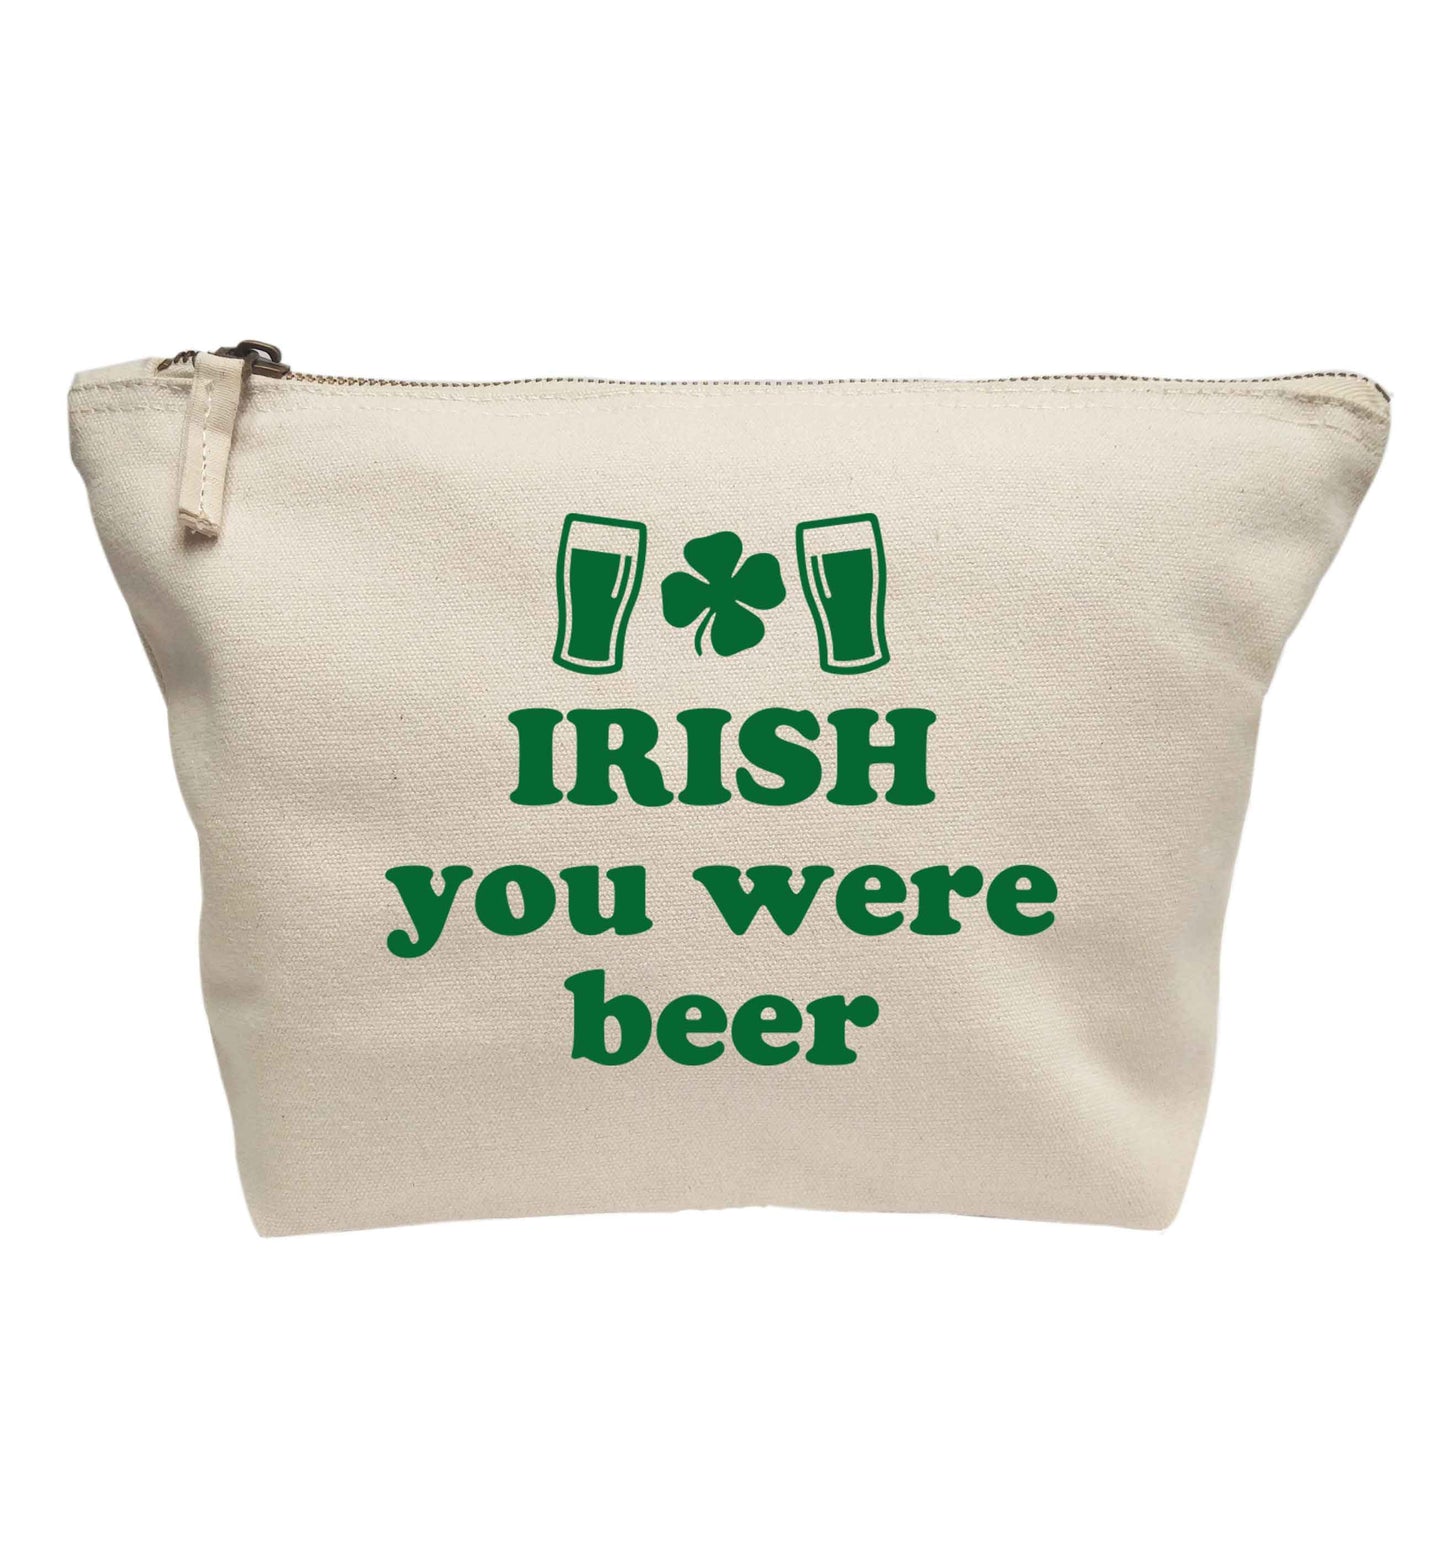 Irish you were beer | Makeup / wash bag